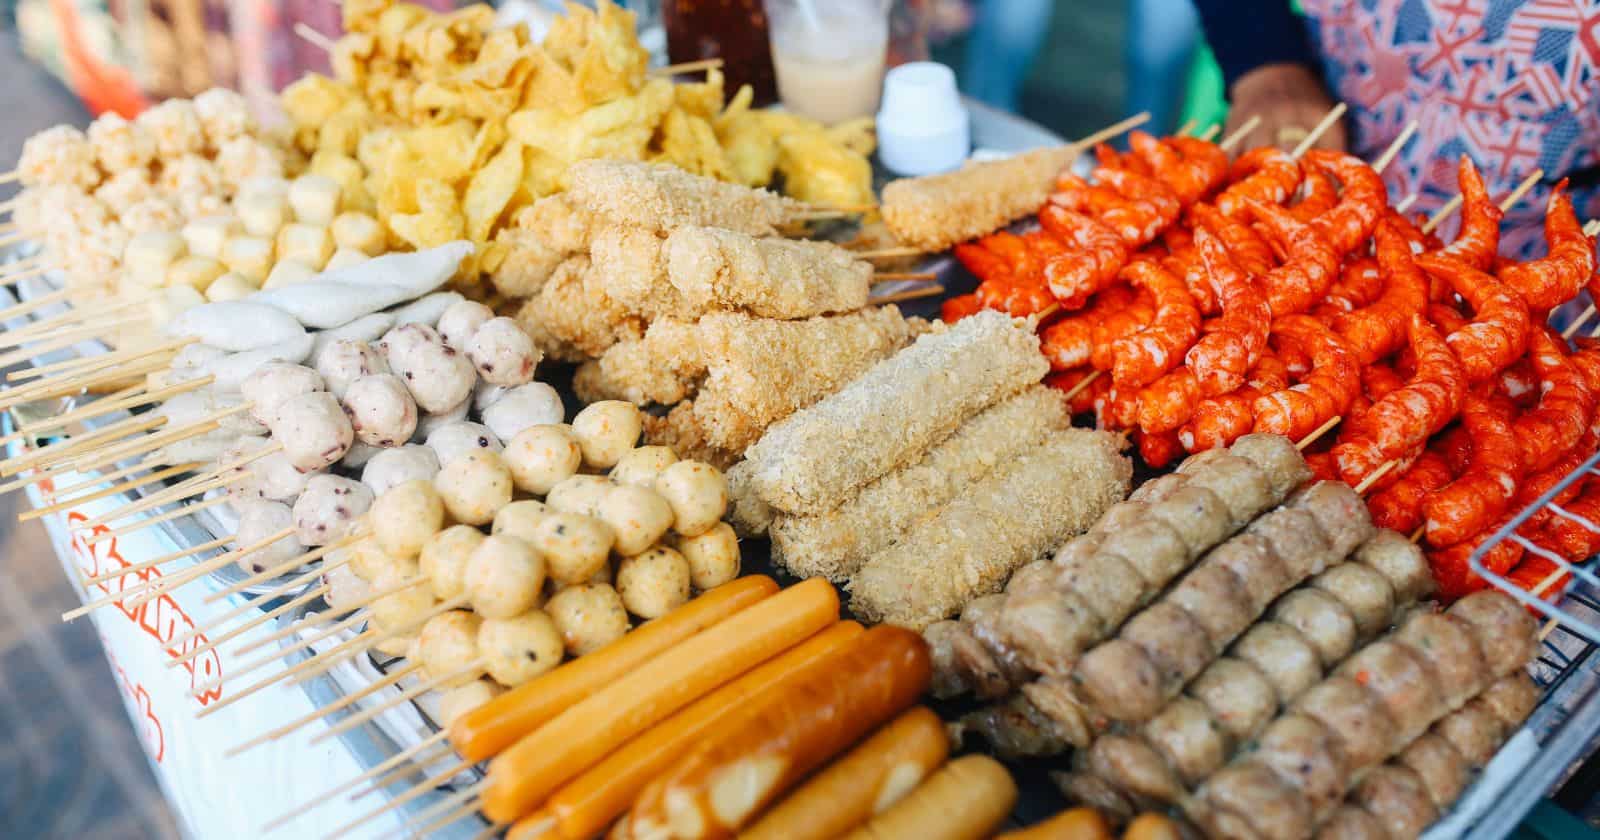 Is It Safe To Eat Thai Street Food?